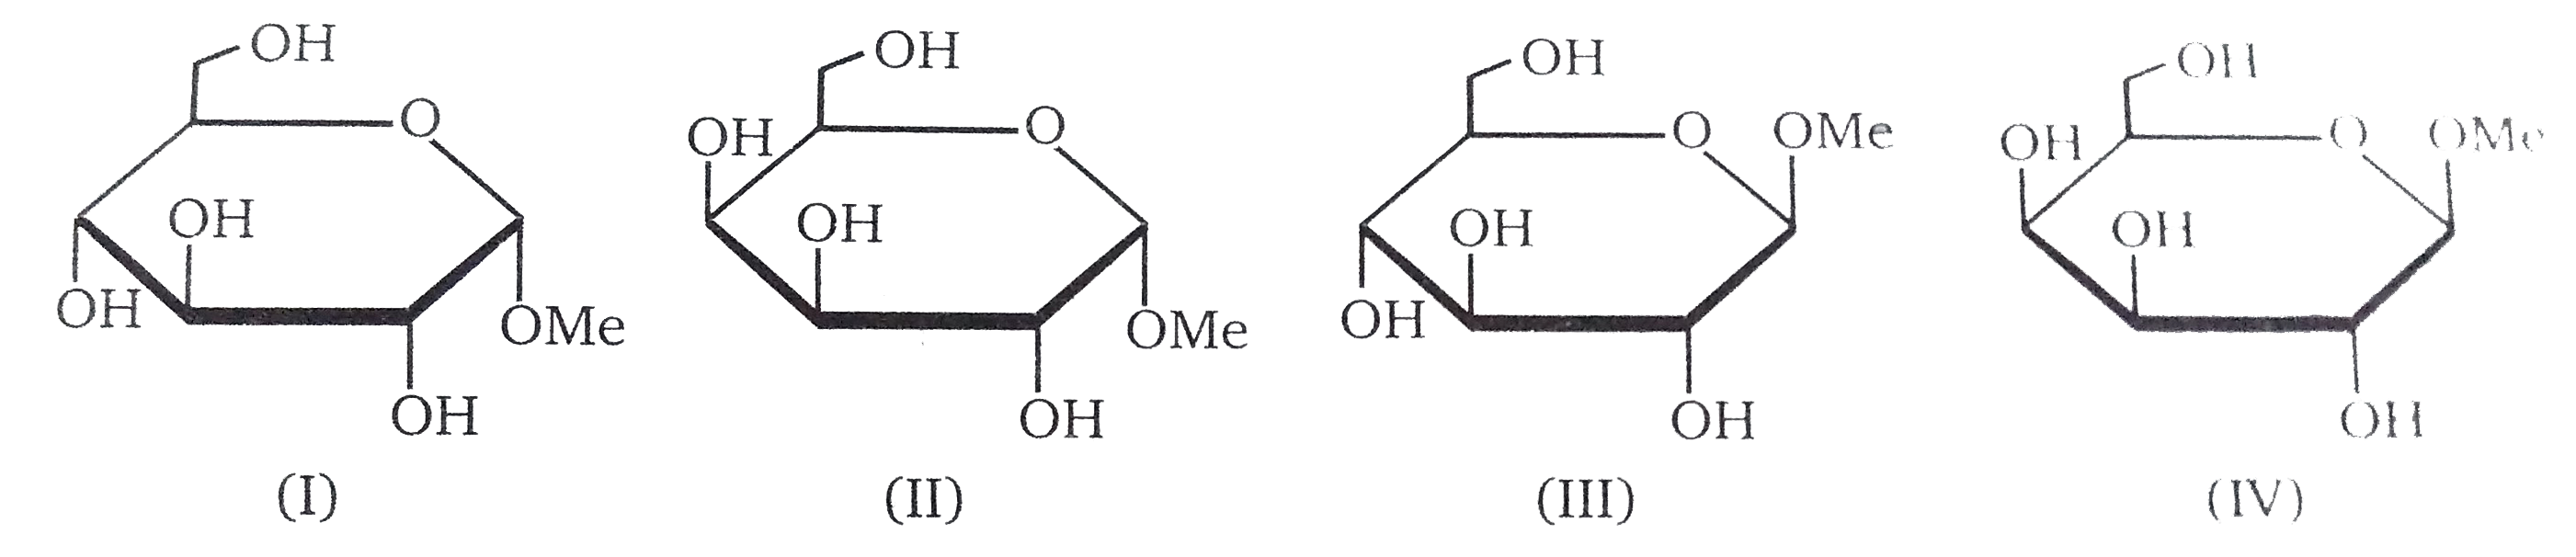 Identify the correct set of stereochemical relationships amongest the following monosaccharides I-IV.